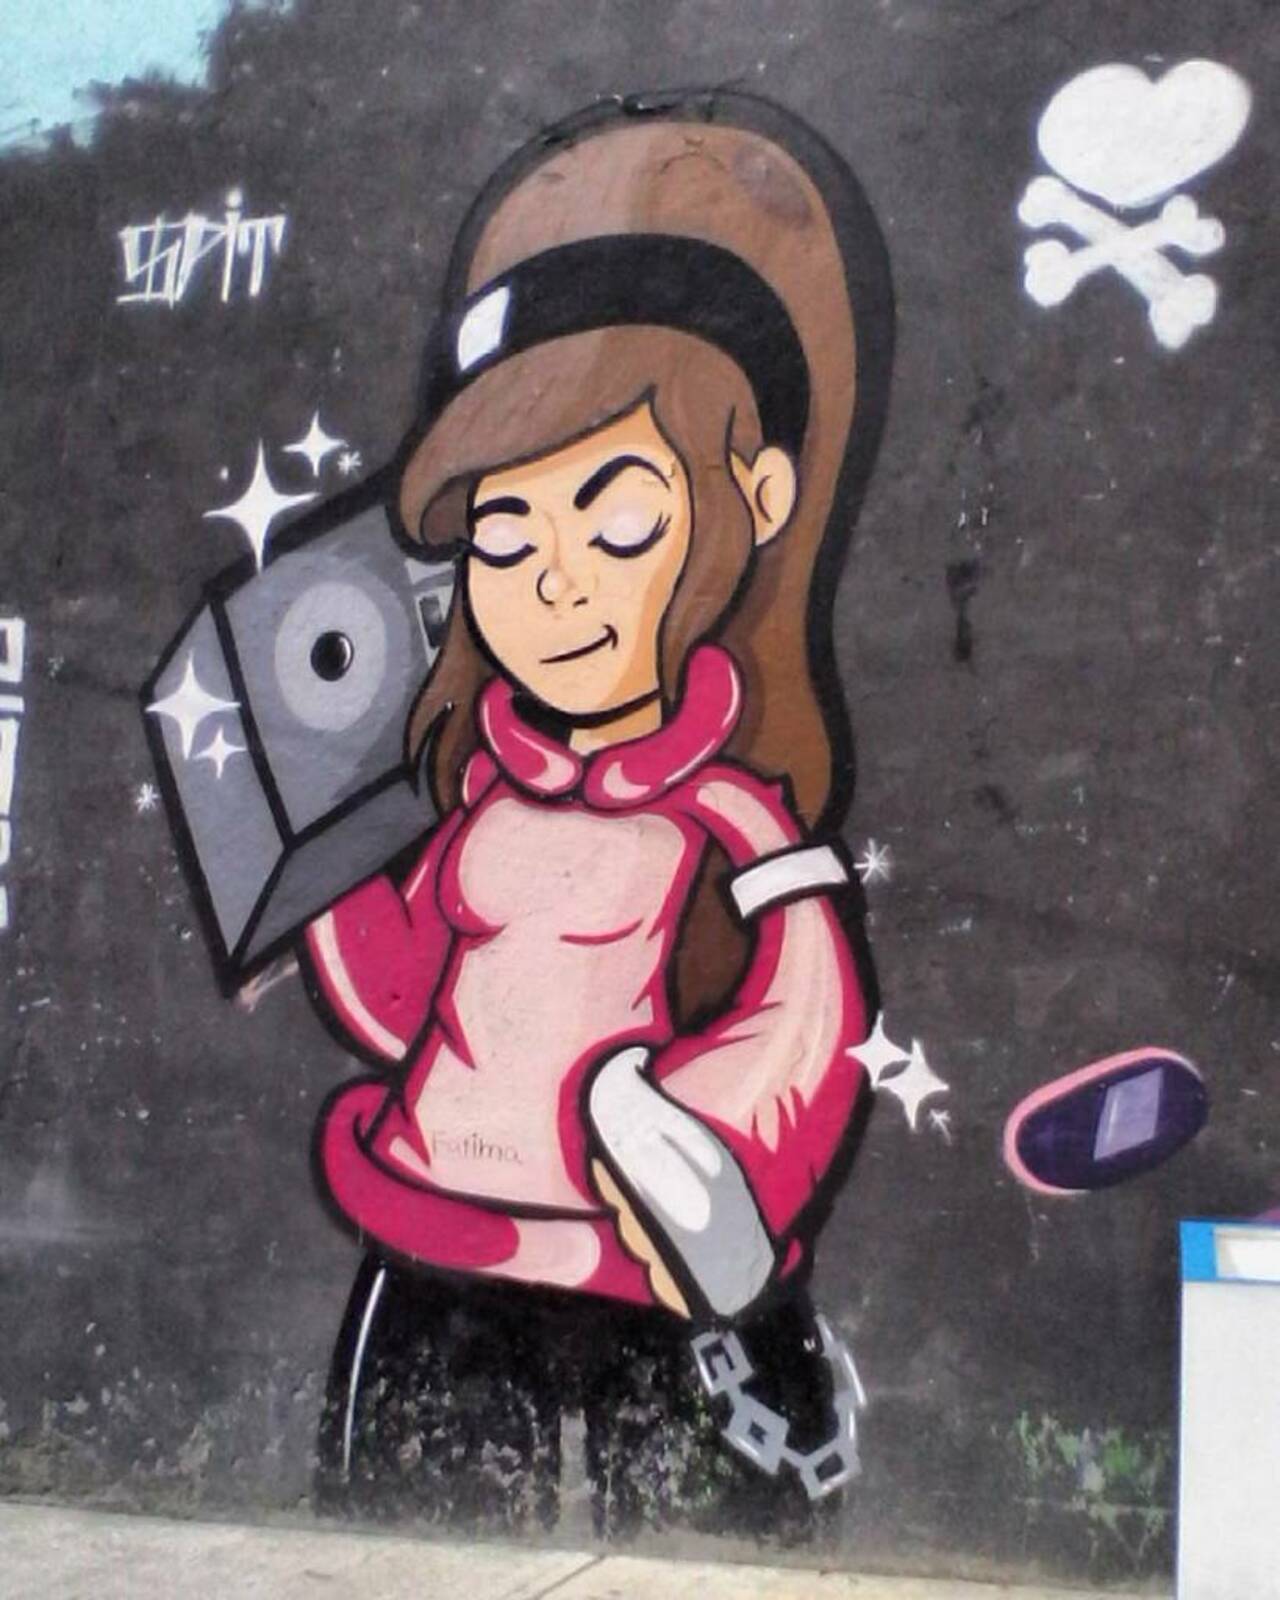 #Mexico #MexicoCity #StreetArt #Graffiti #StreetArtMexico #Urban #Art #Mural #Architecture #Wall #Woman #Urban #Sty… http://t.co/8cNY17NSCC